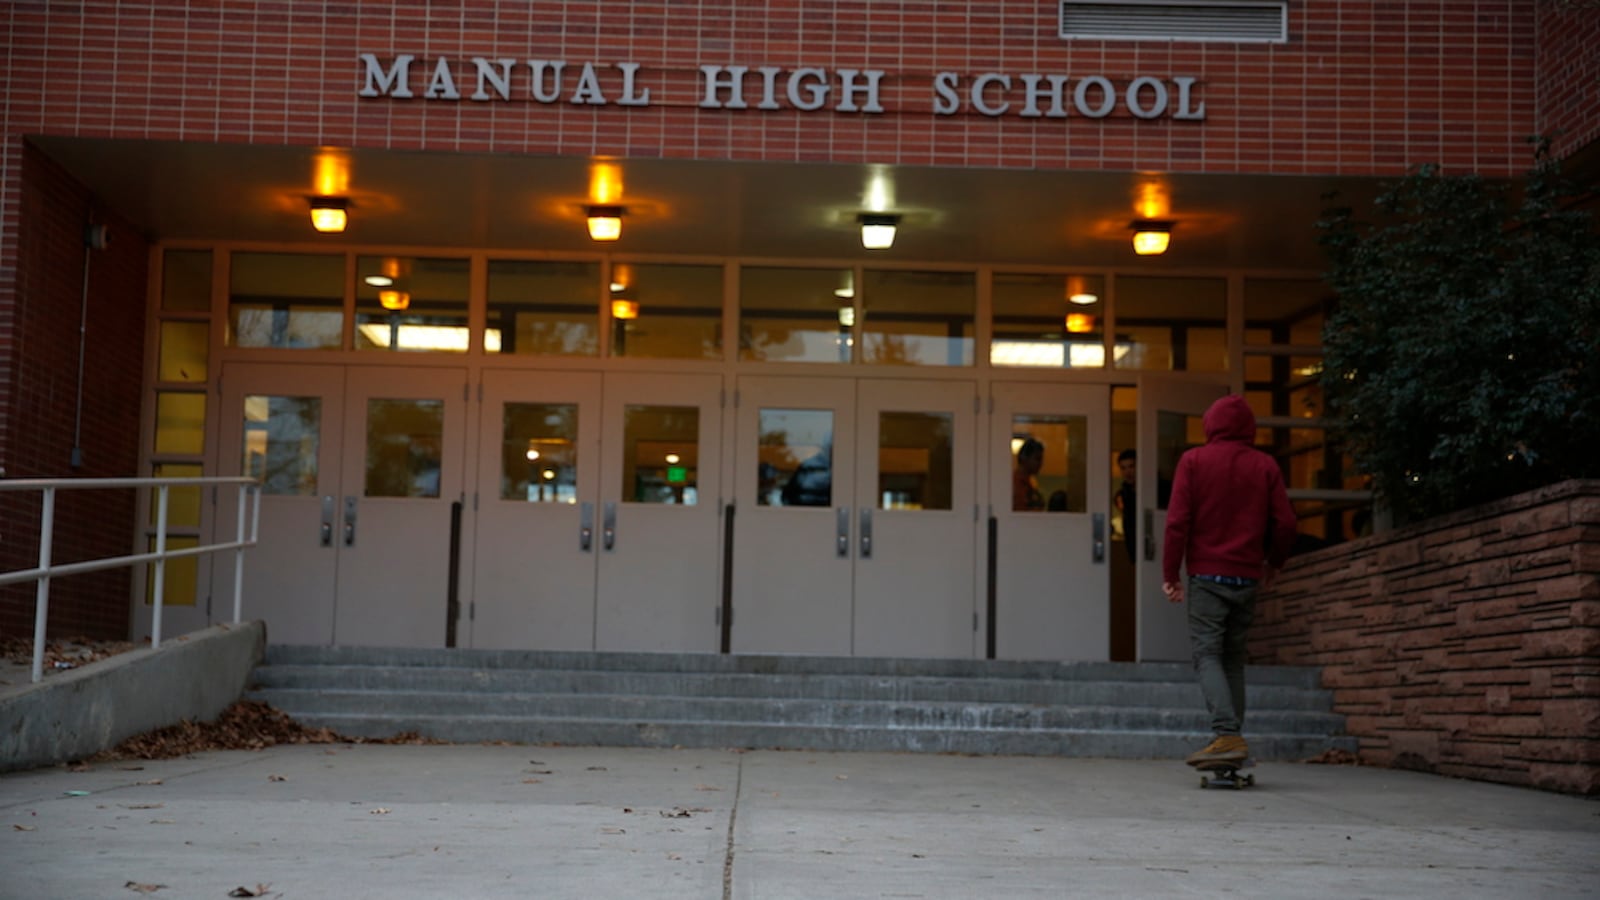 Manual High School in northeast Denver.